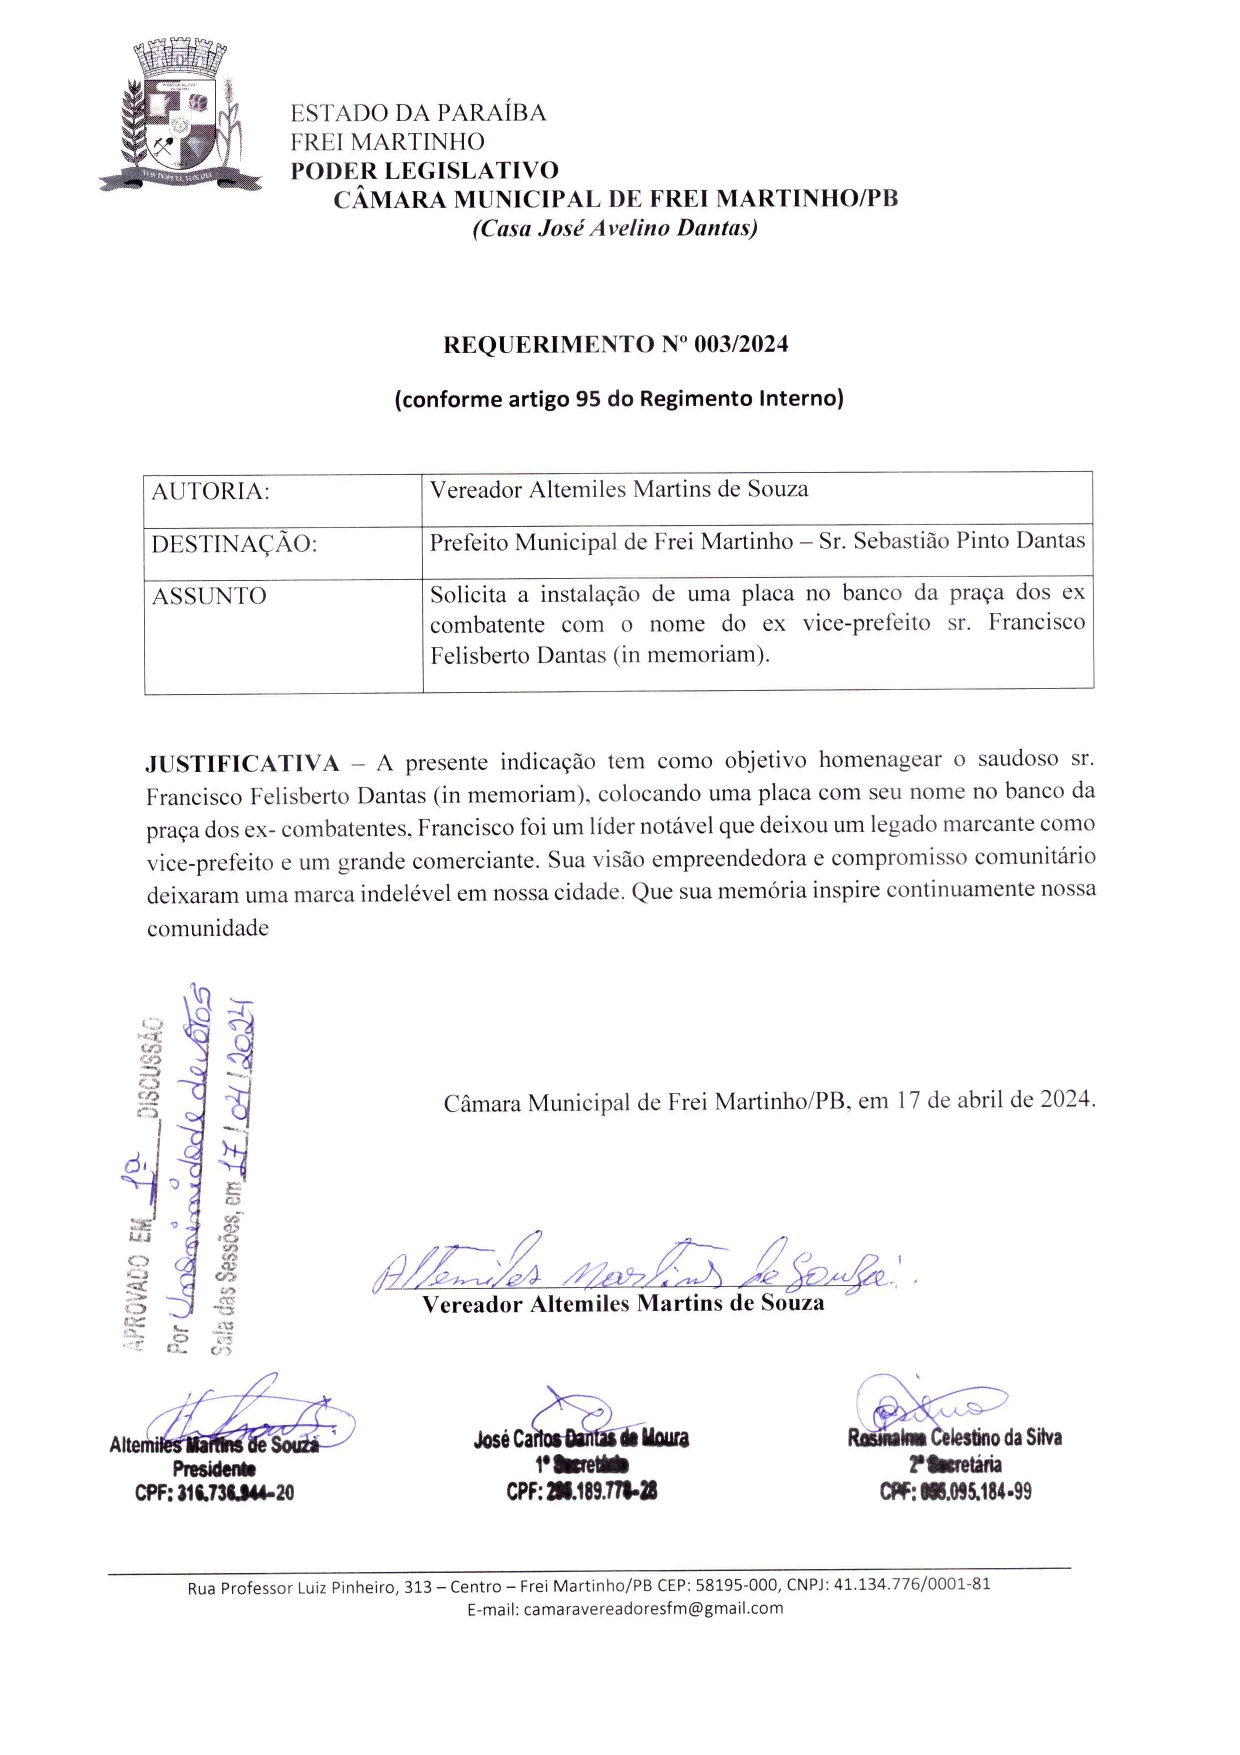 Requerimento 003/2024 - Vereador Altemiles Martins de Souza